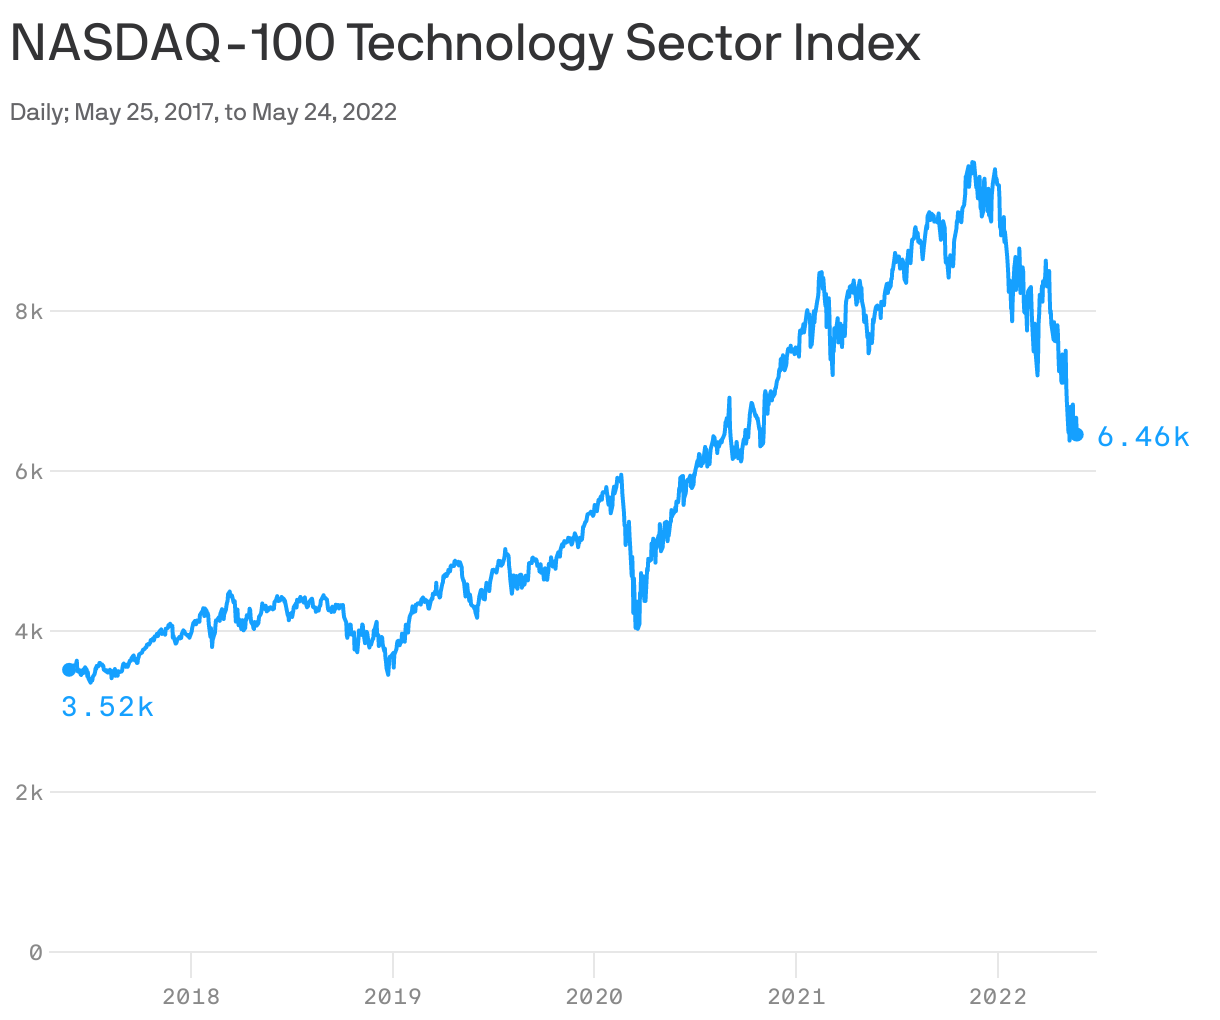 NASDAQ-100 Technology Sector Index